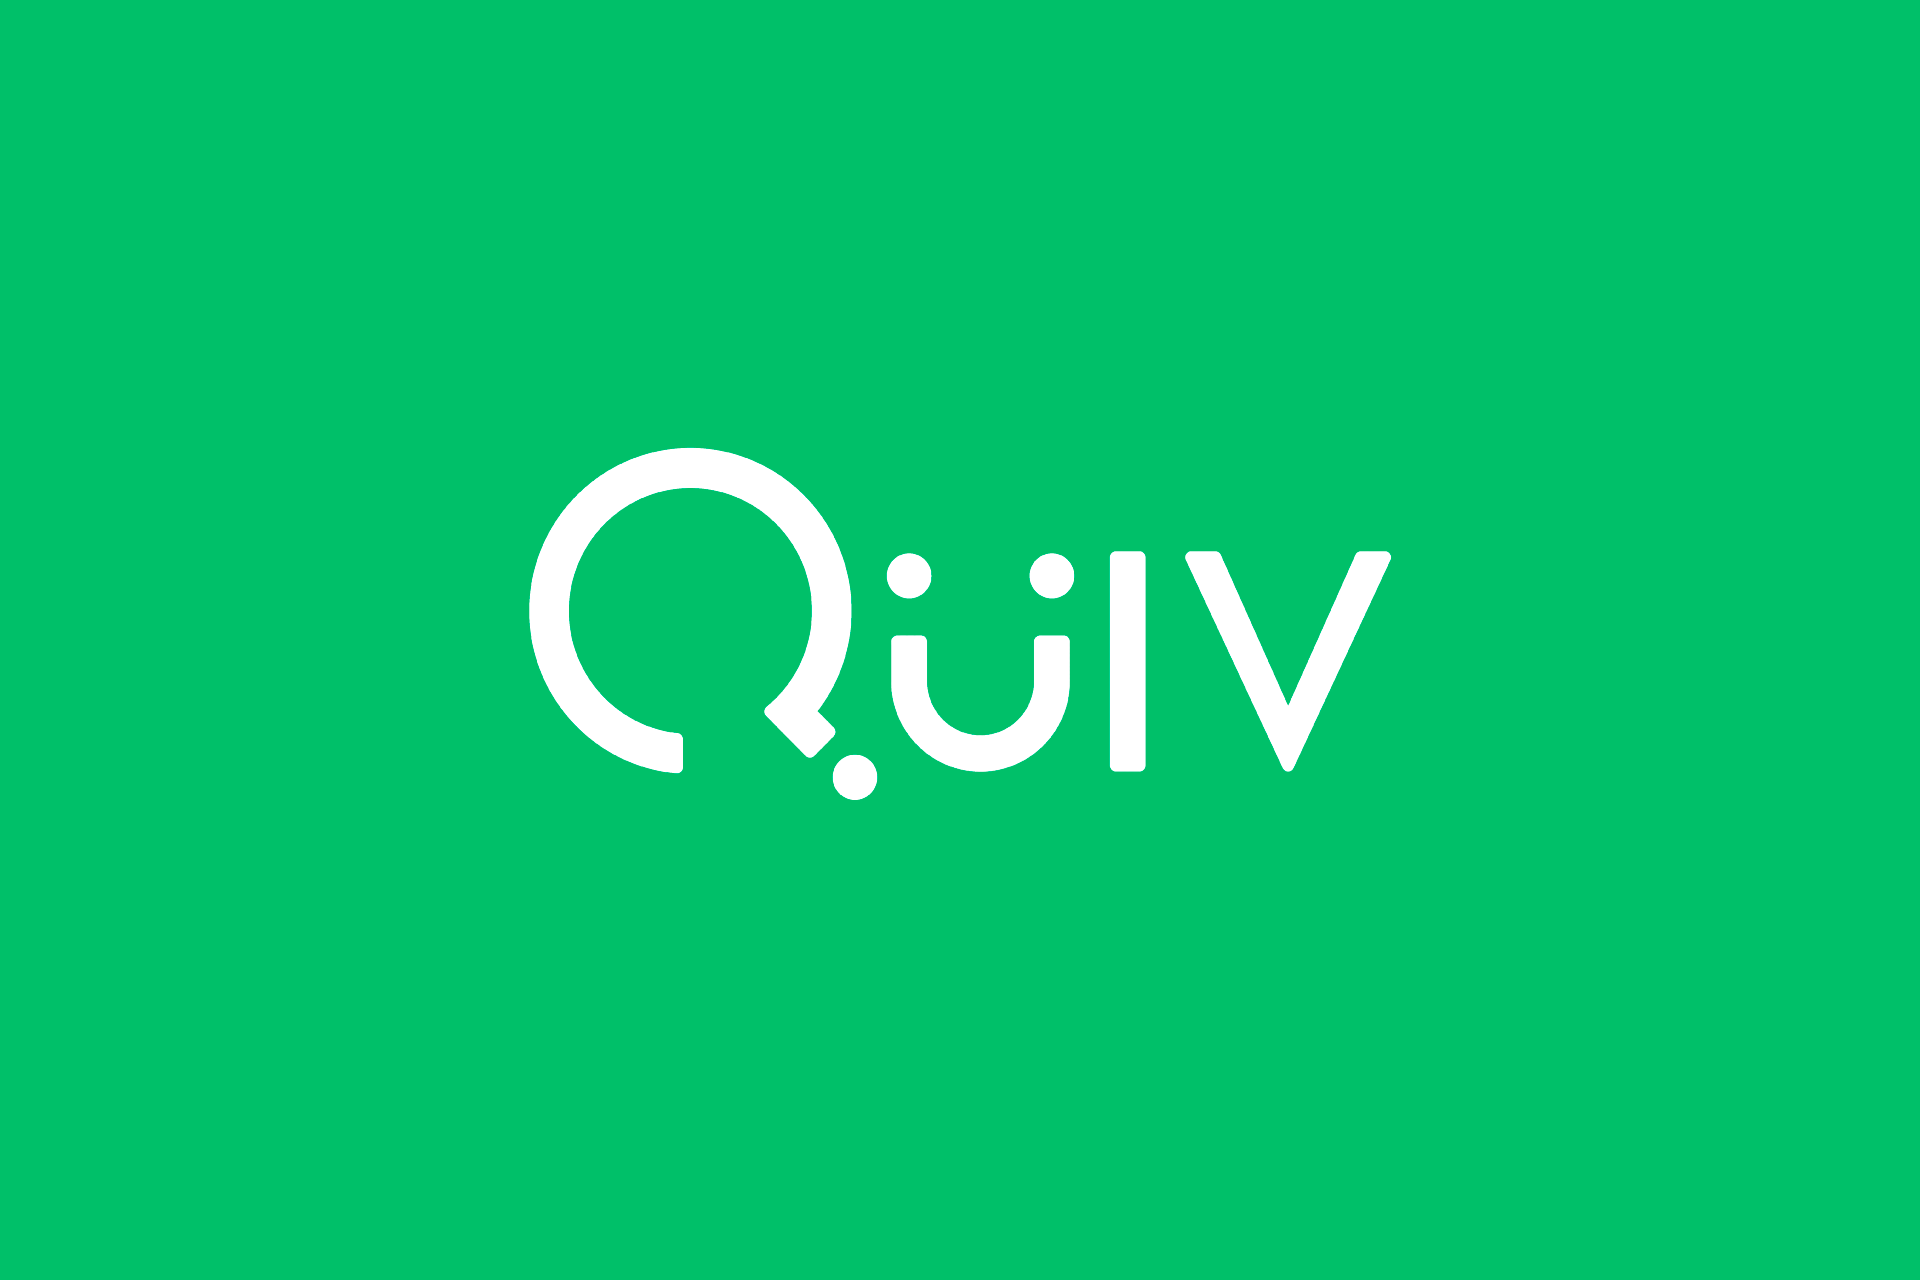 Quiv digital charity platform by Evrone